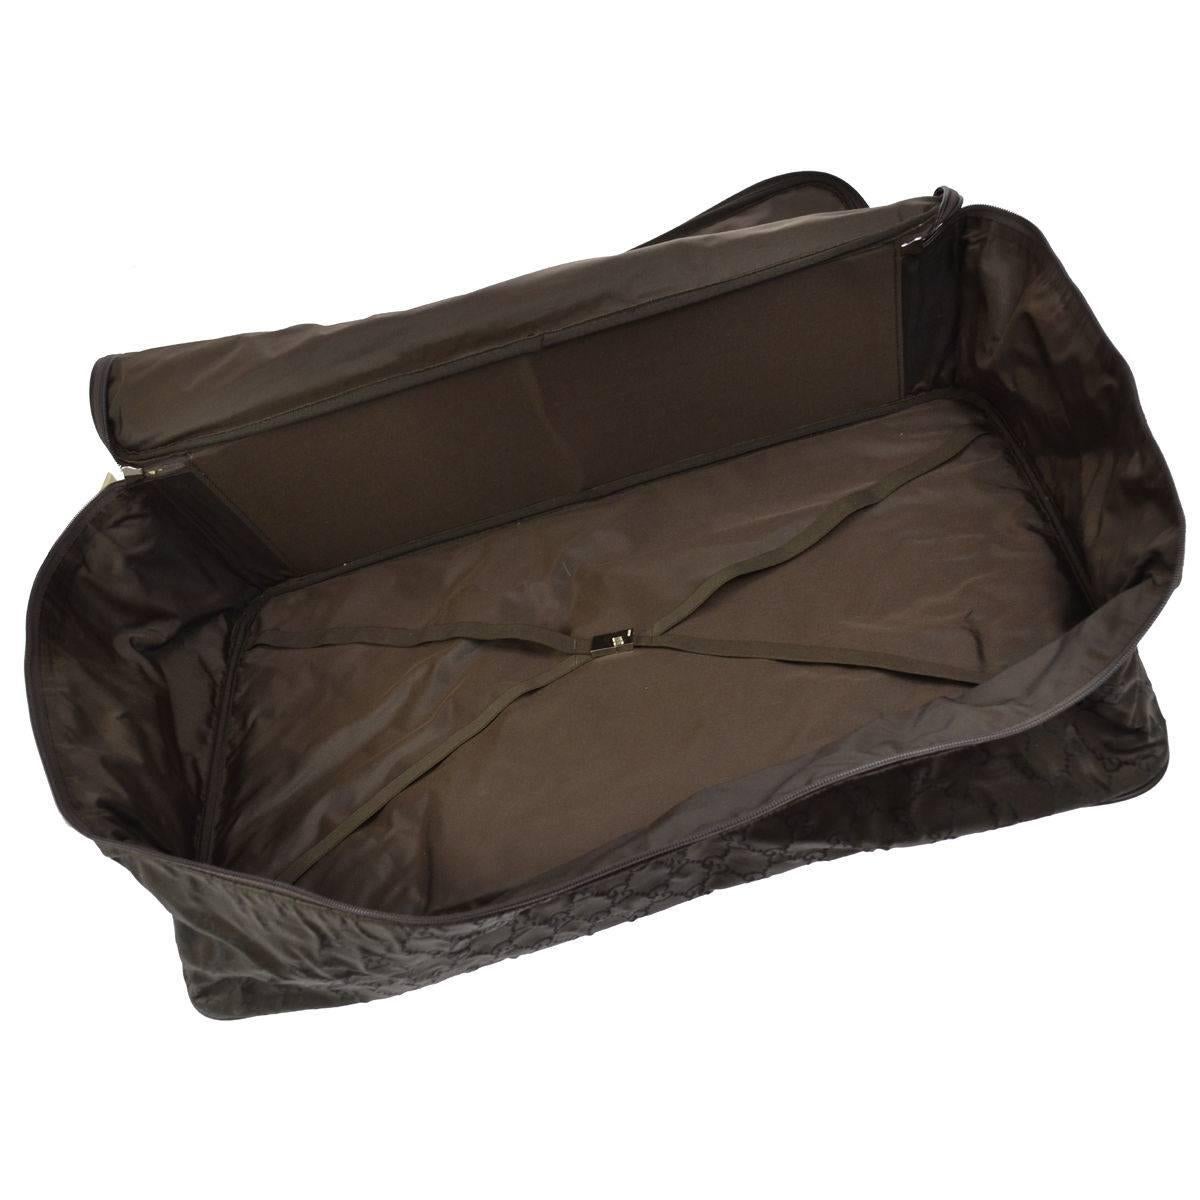 Black Gucci Chocolate Gucci Monogram CarryAll Duffle Luggage Travel Bag W/Accessories